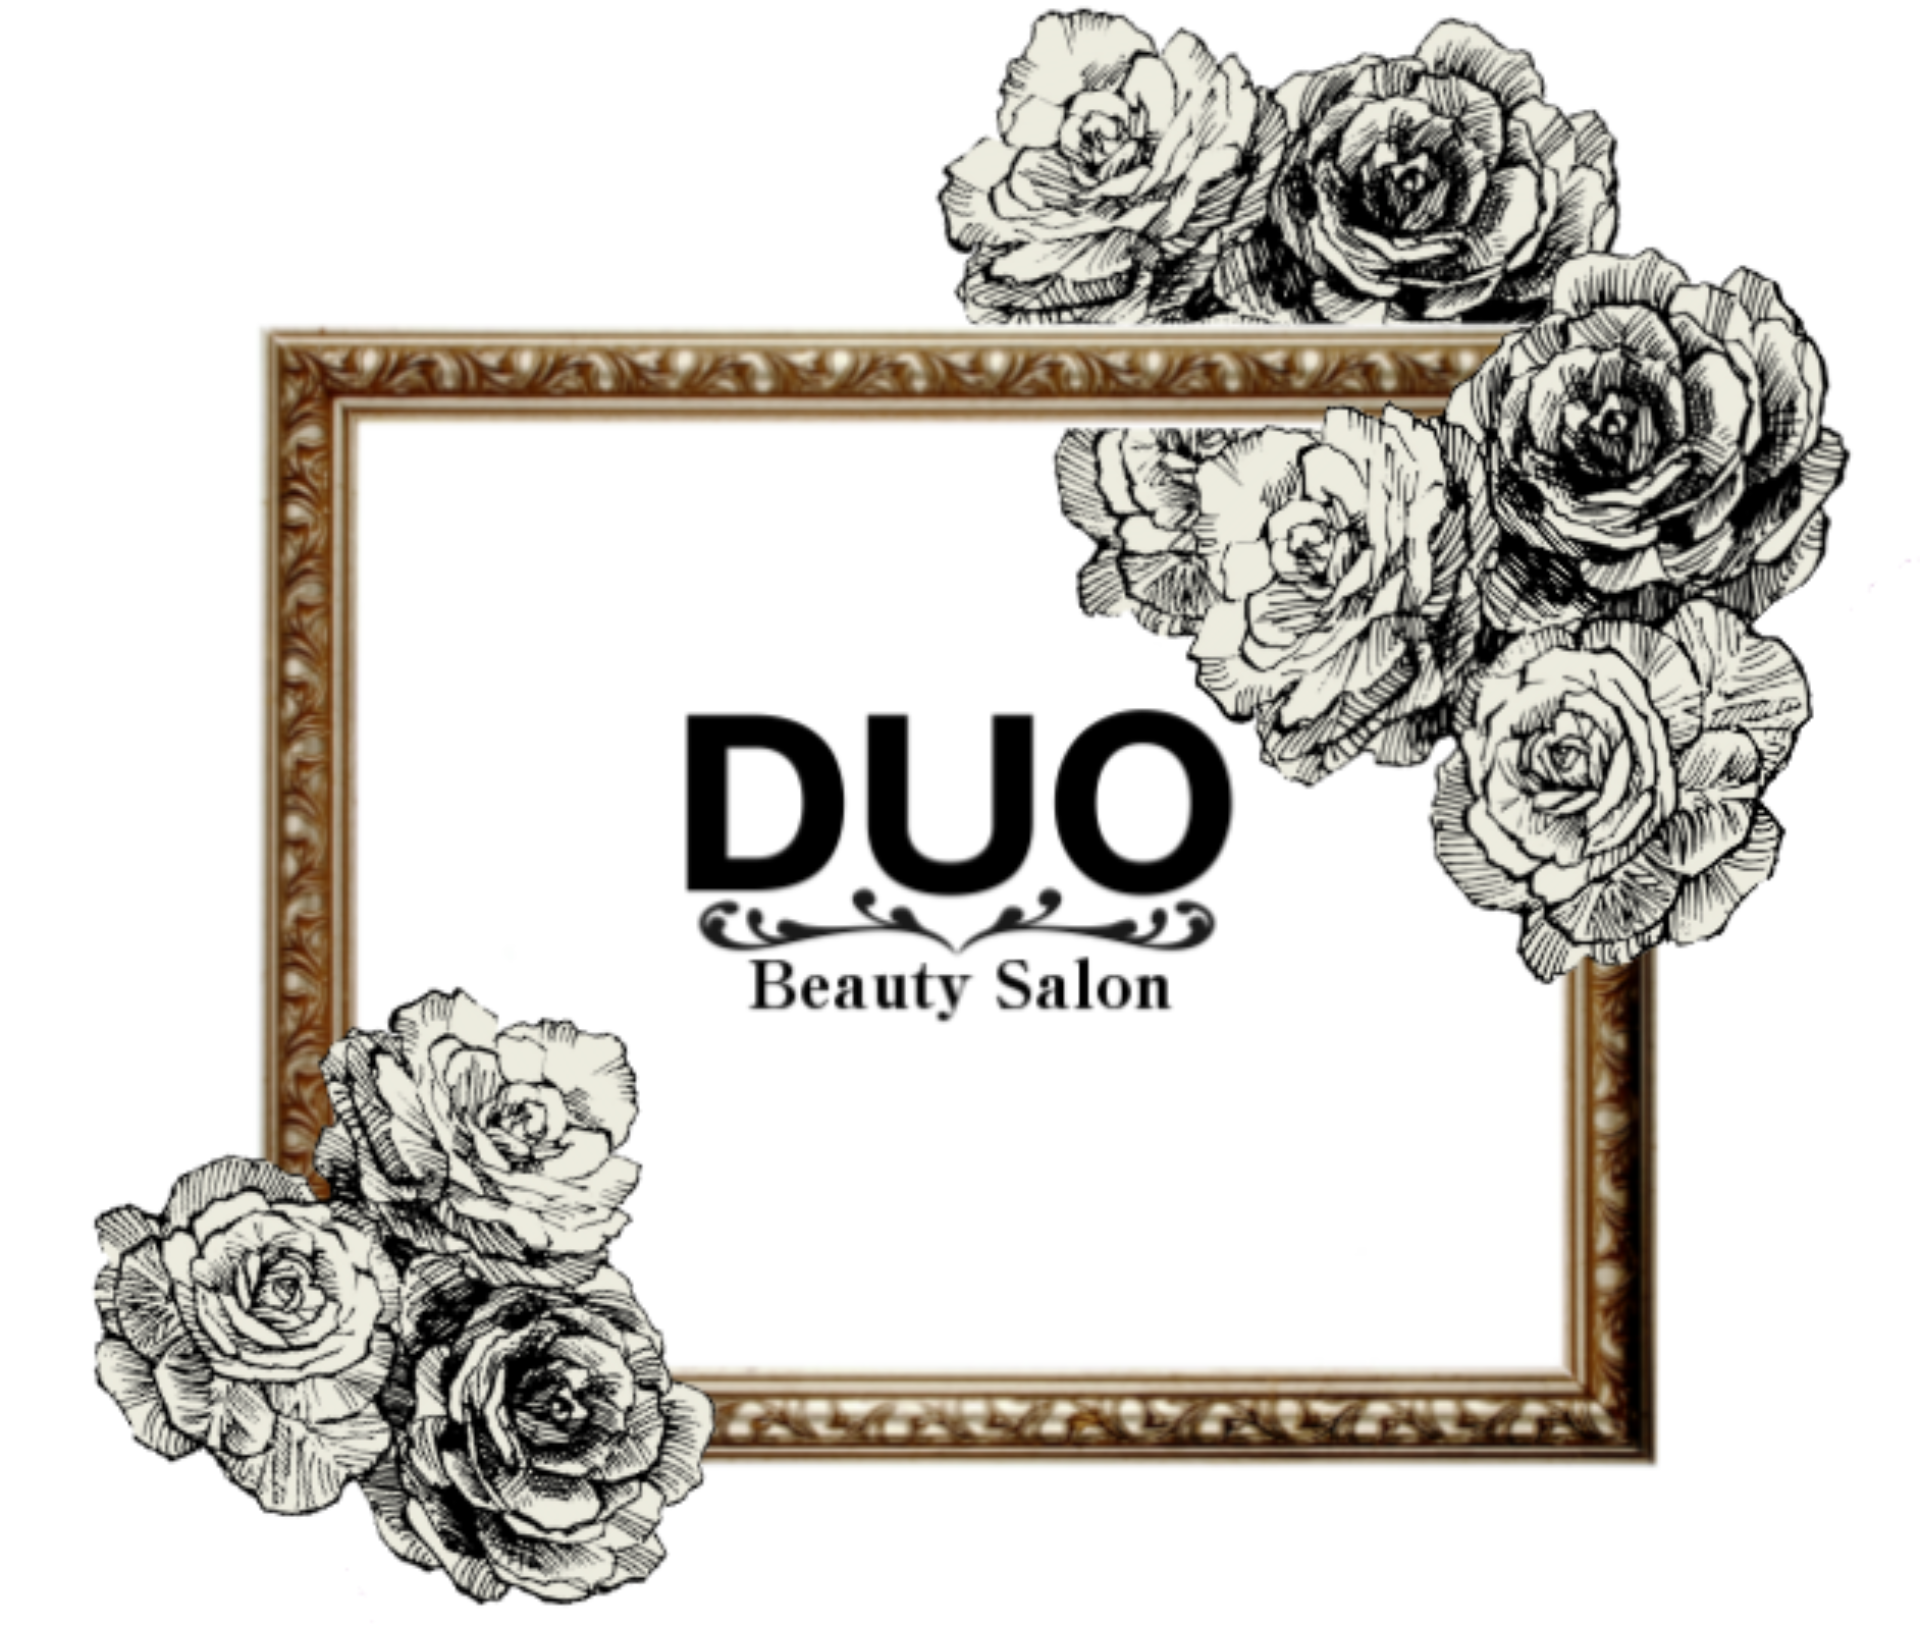 Beauty Salon　DUO